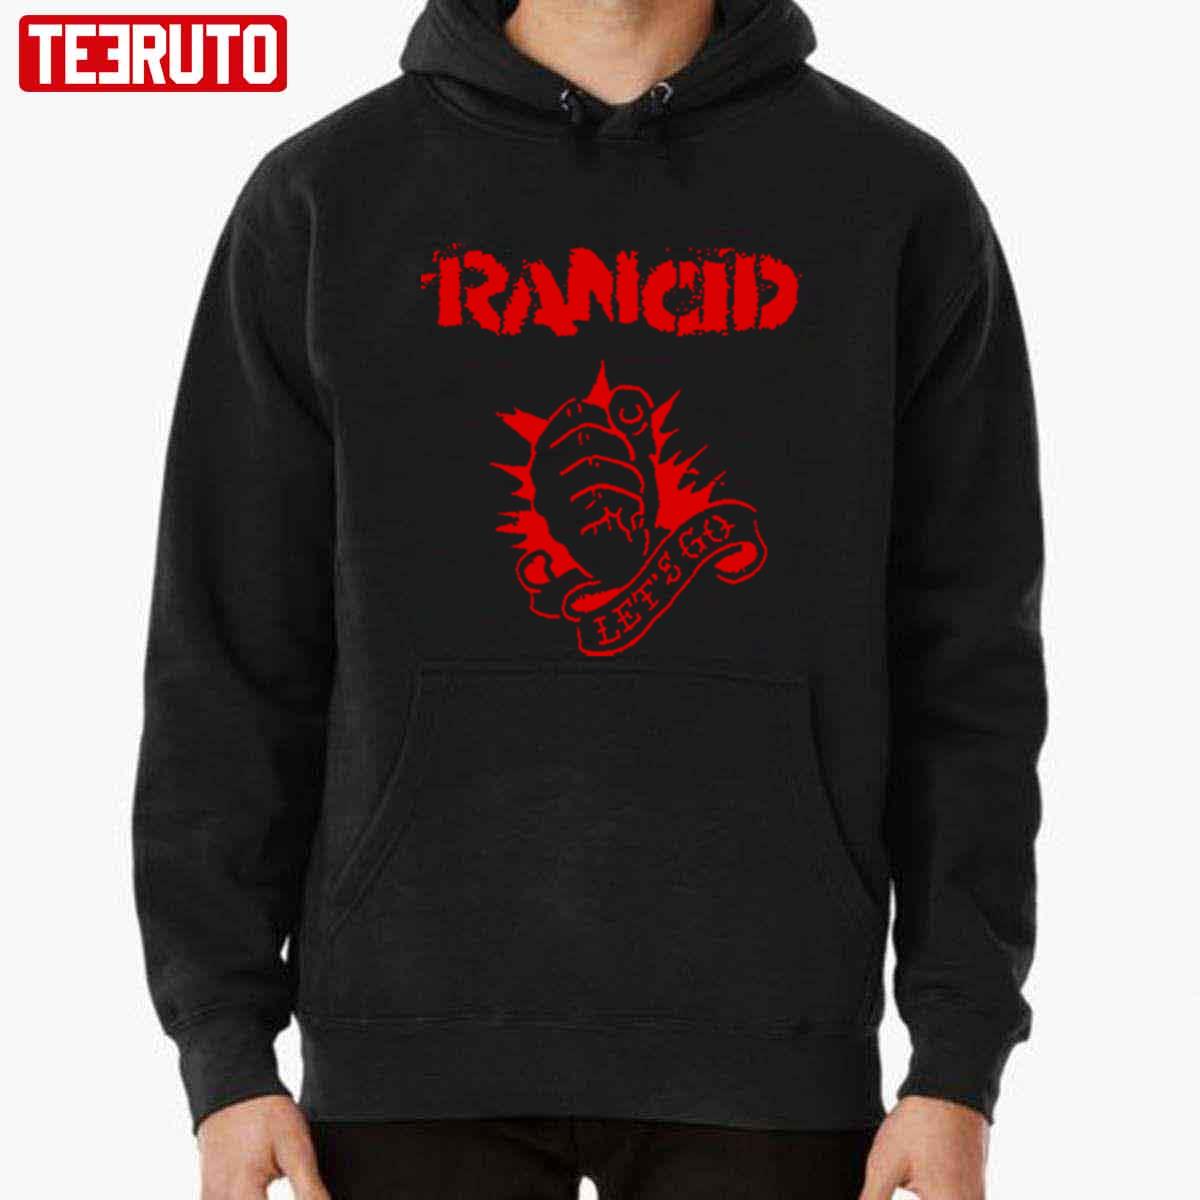 Let's Go Original Of Rancid Artwork Unisex T-shirt